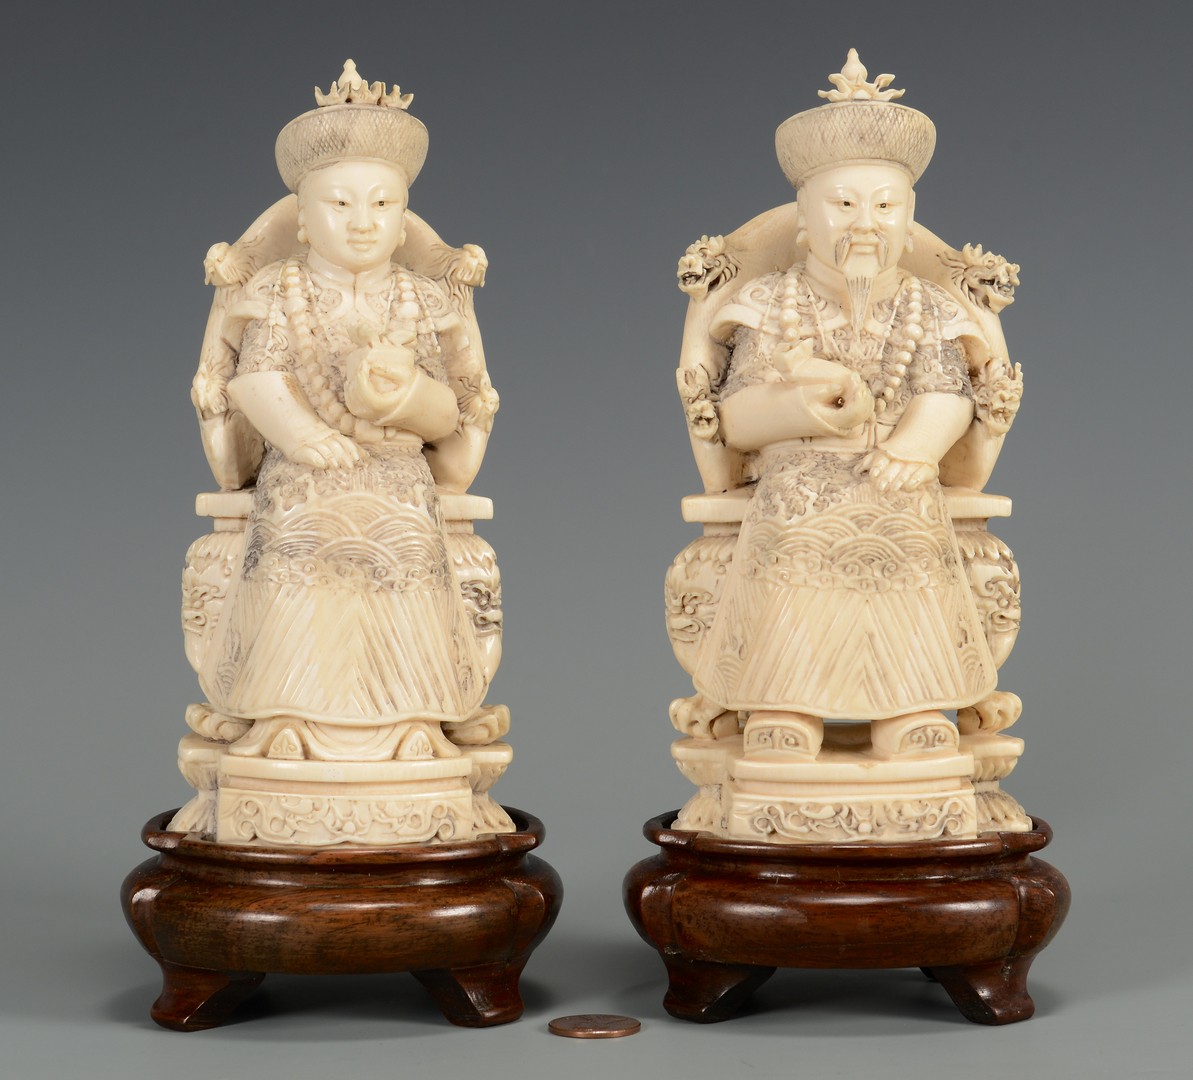 Lot 21: Pr. Chinese Carved Ivory Figures, Emperor & Empress